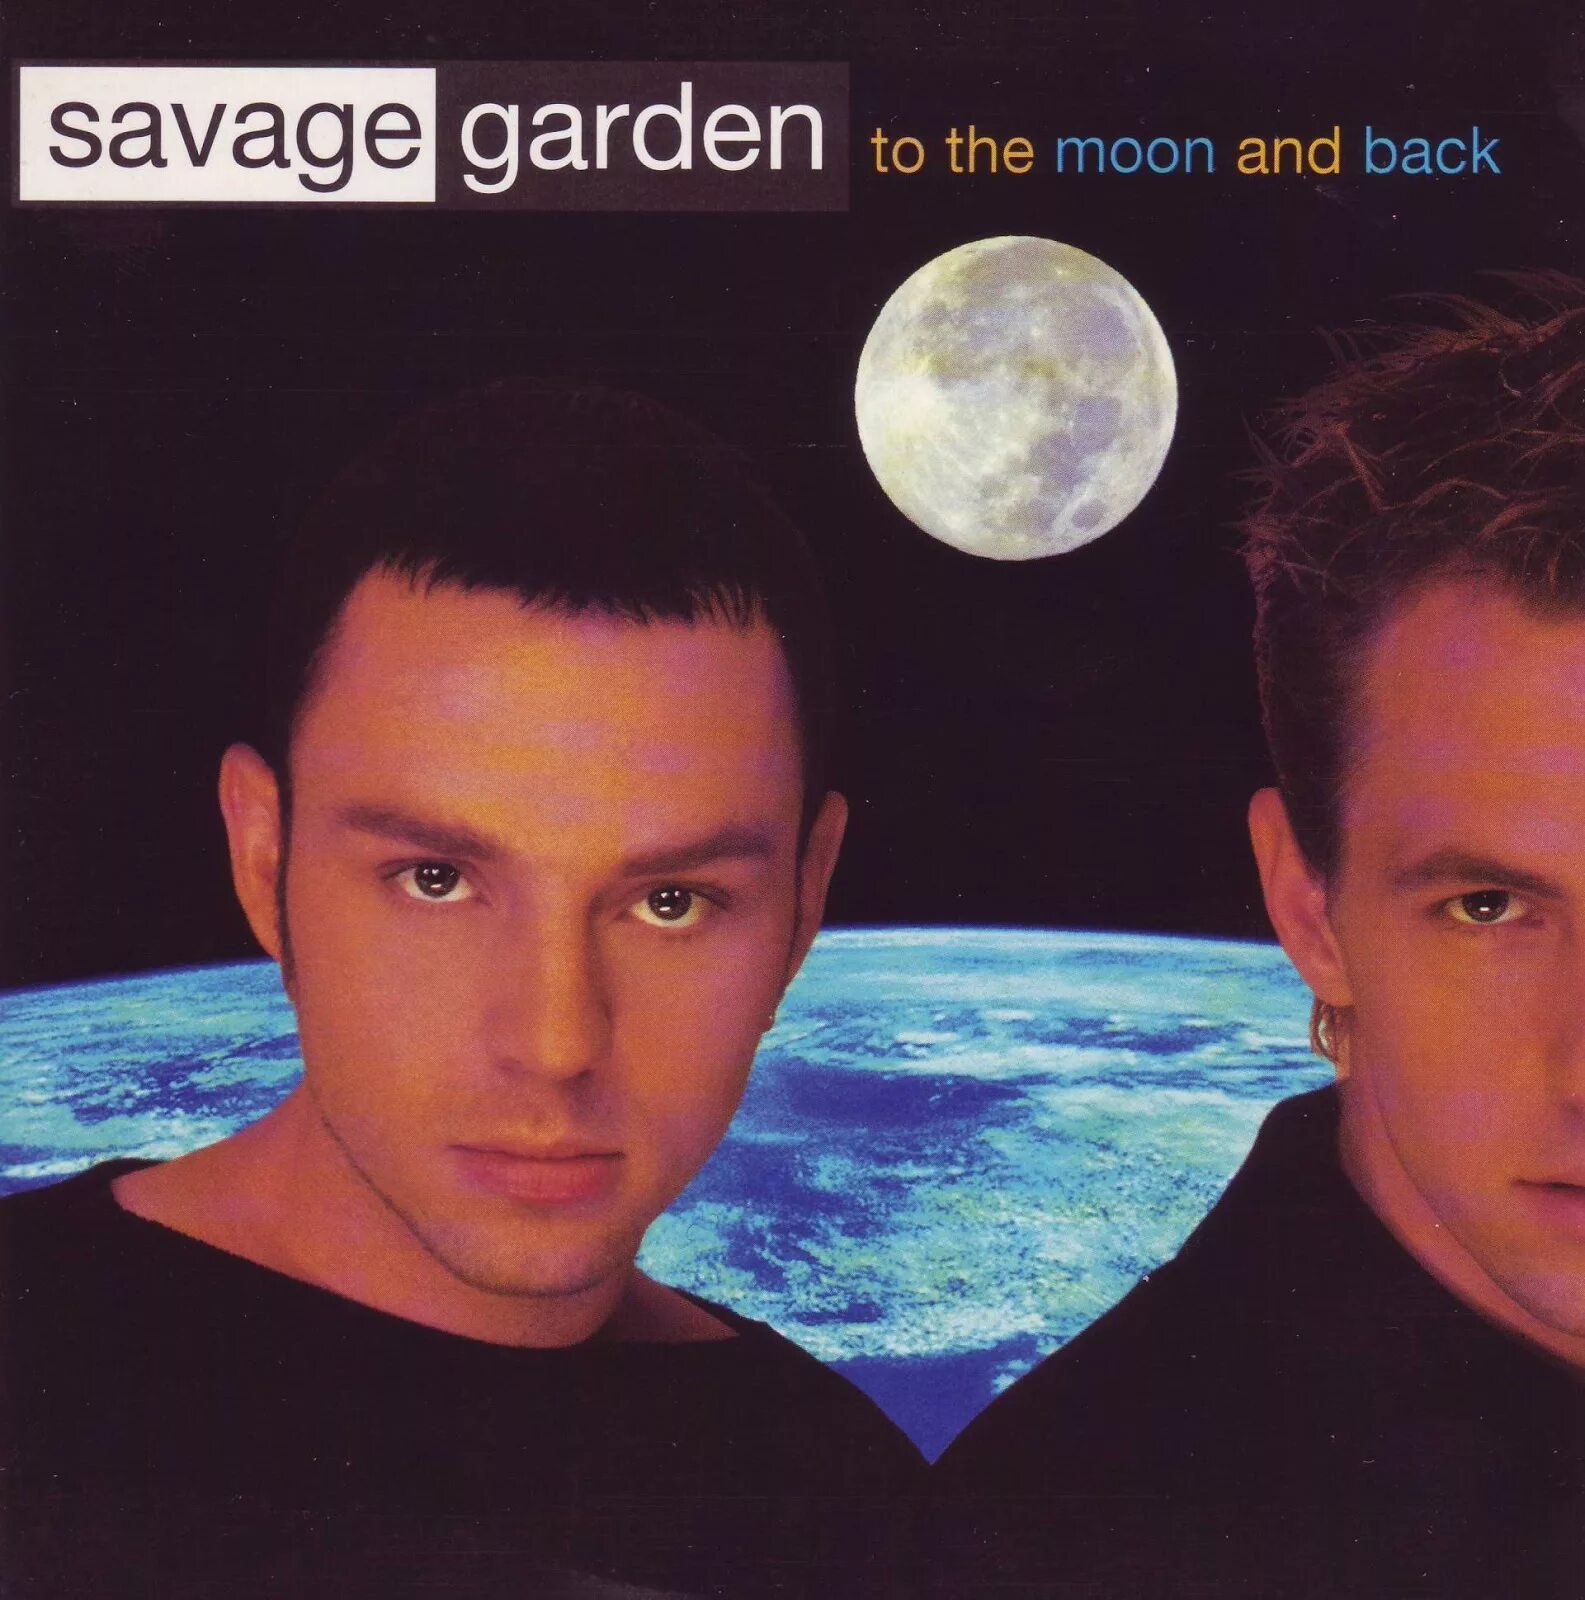 To the moon песня на русском. Savage Garden певец. Savage Garden to the Moon and back обложка. Savage Garden обложка. Севеч Гарден to the Moon.